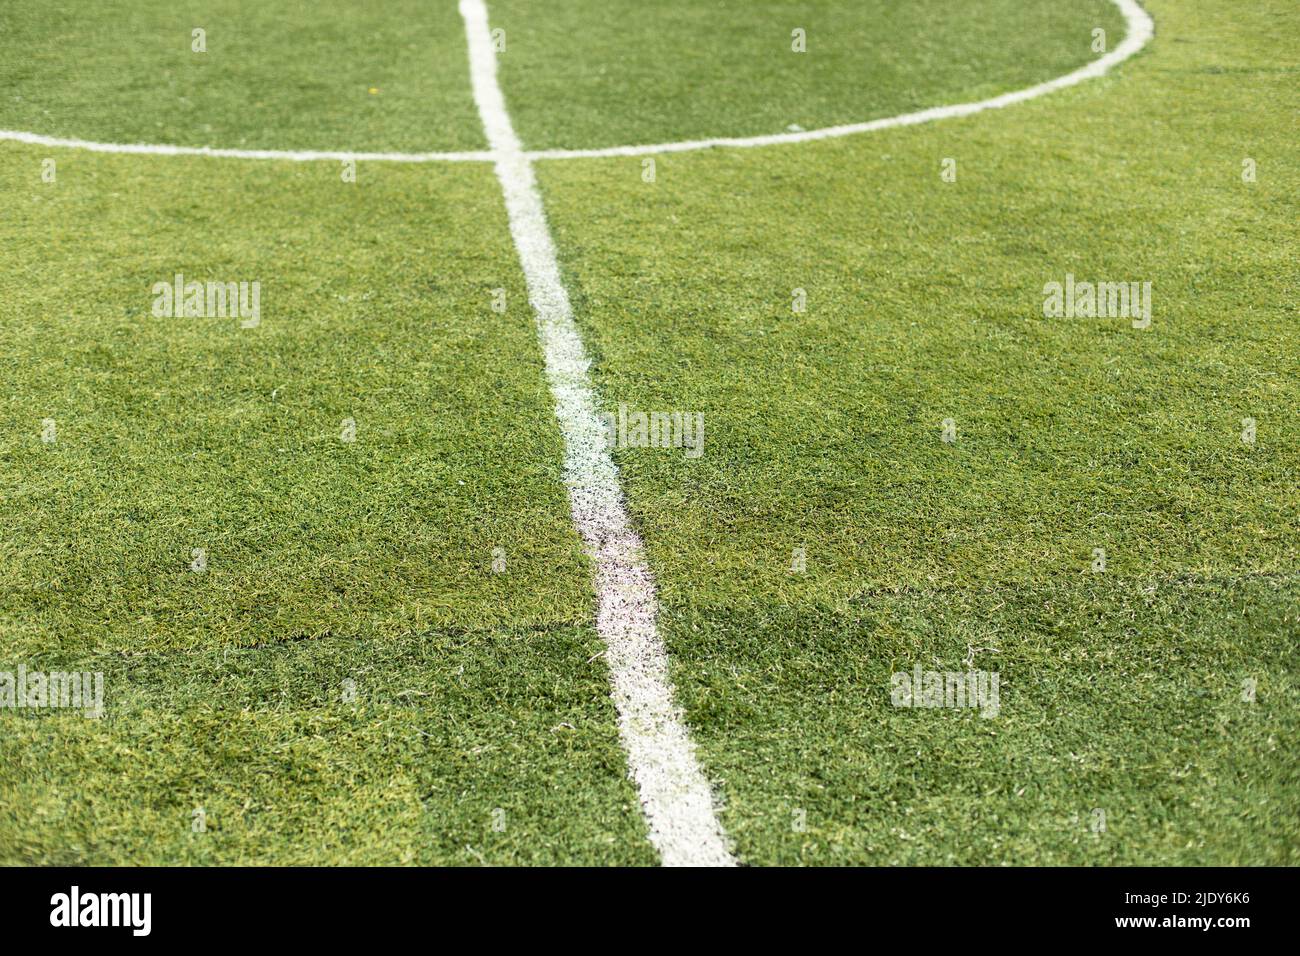 Marking of football field. White stripe on green grass. Stock Photo